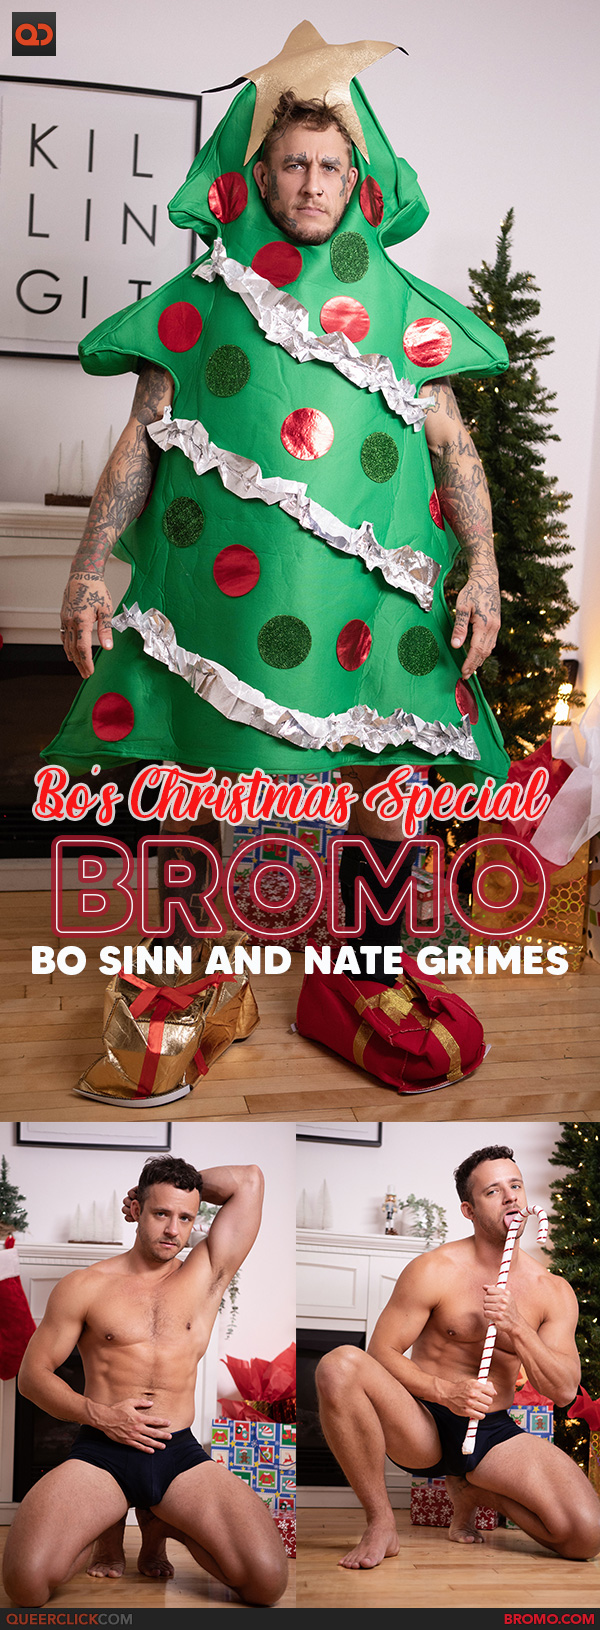 Bromo.com: Bo Sinn and Nate Grimes - Bo's Christmas Special